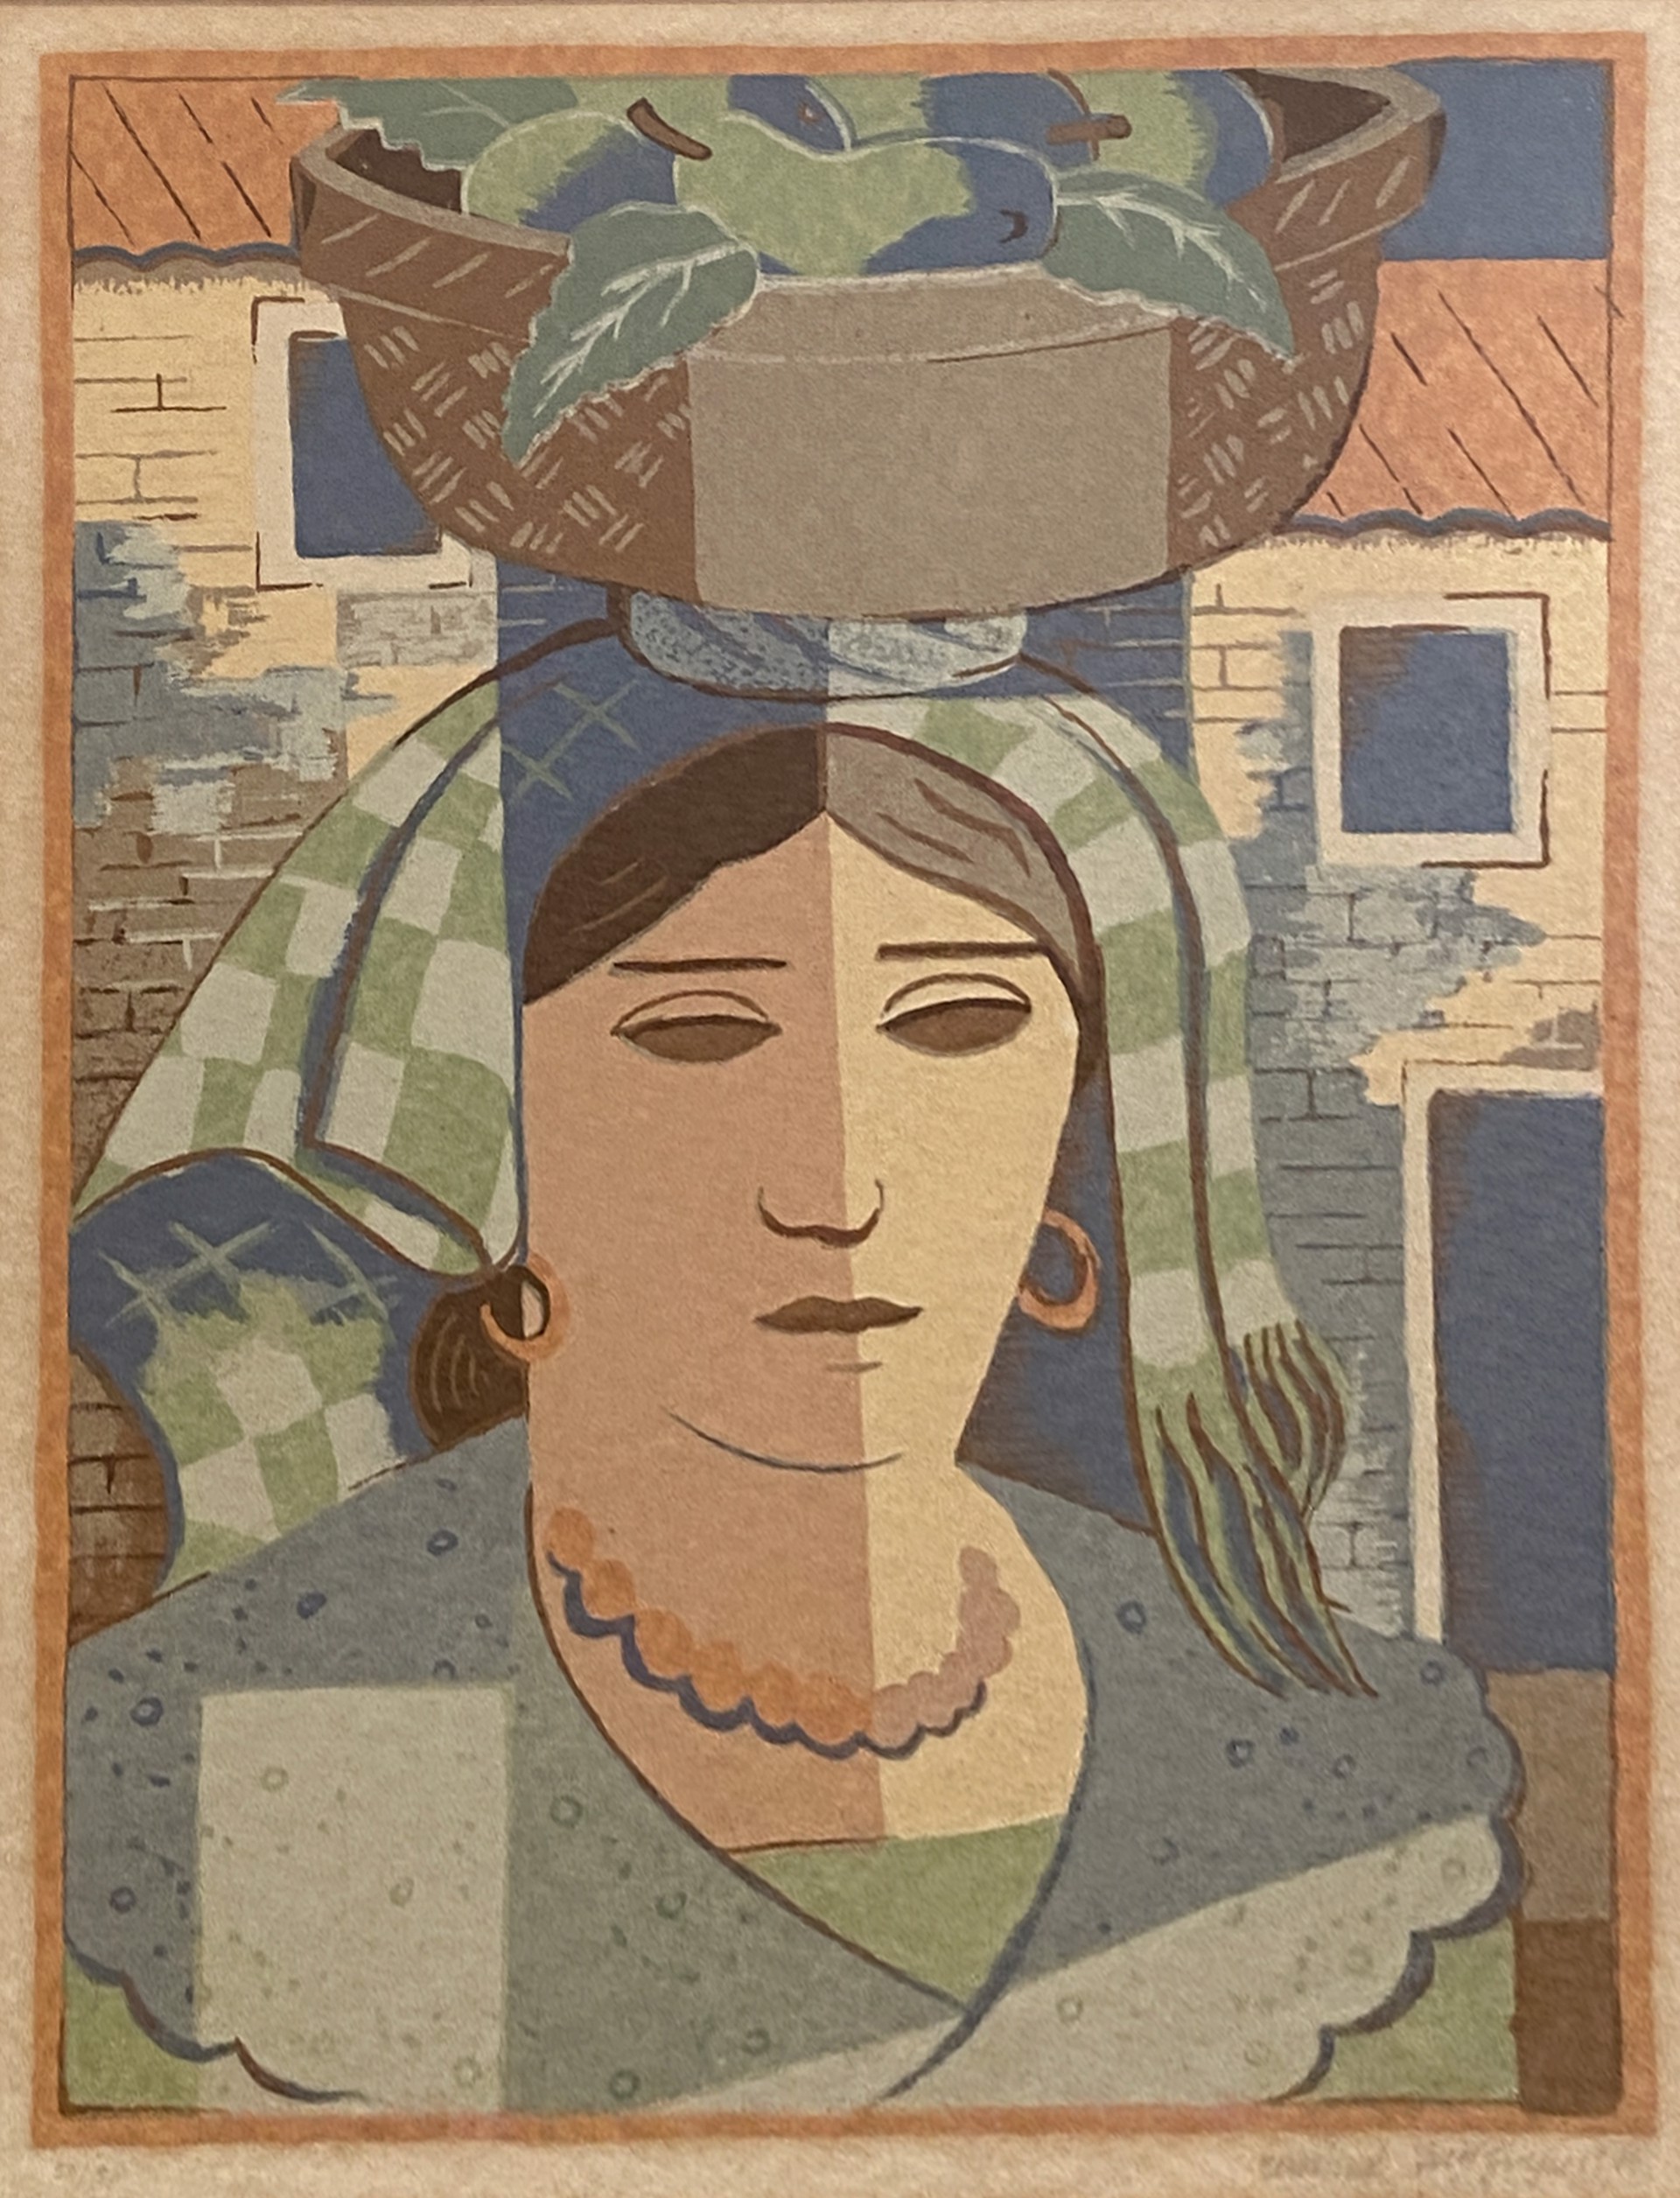 Lady with Basket on Head by Edmund Kinzinger